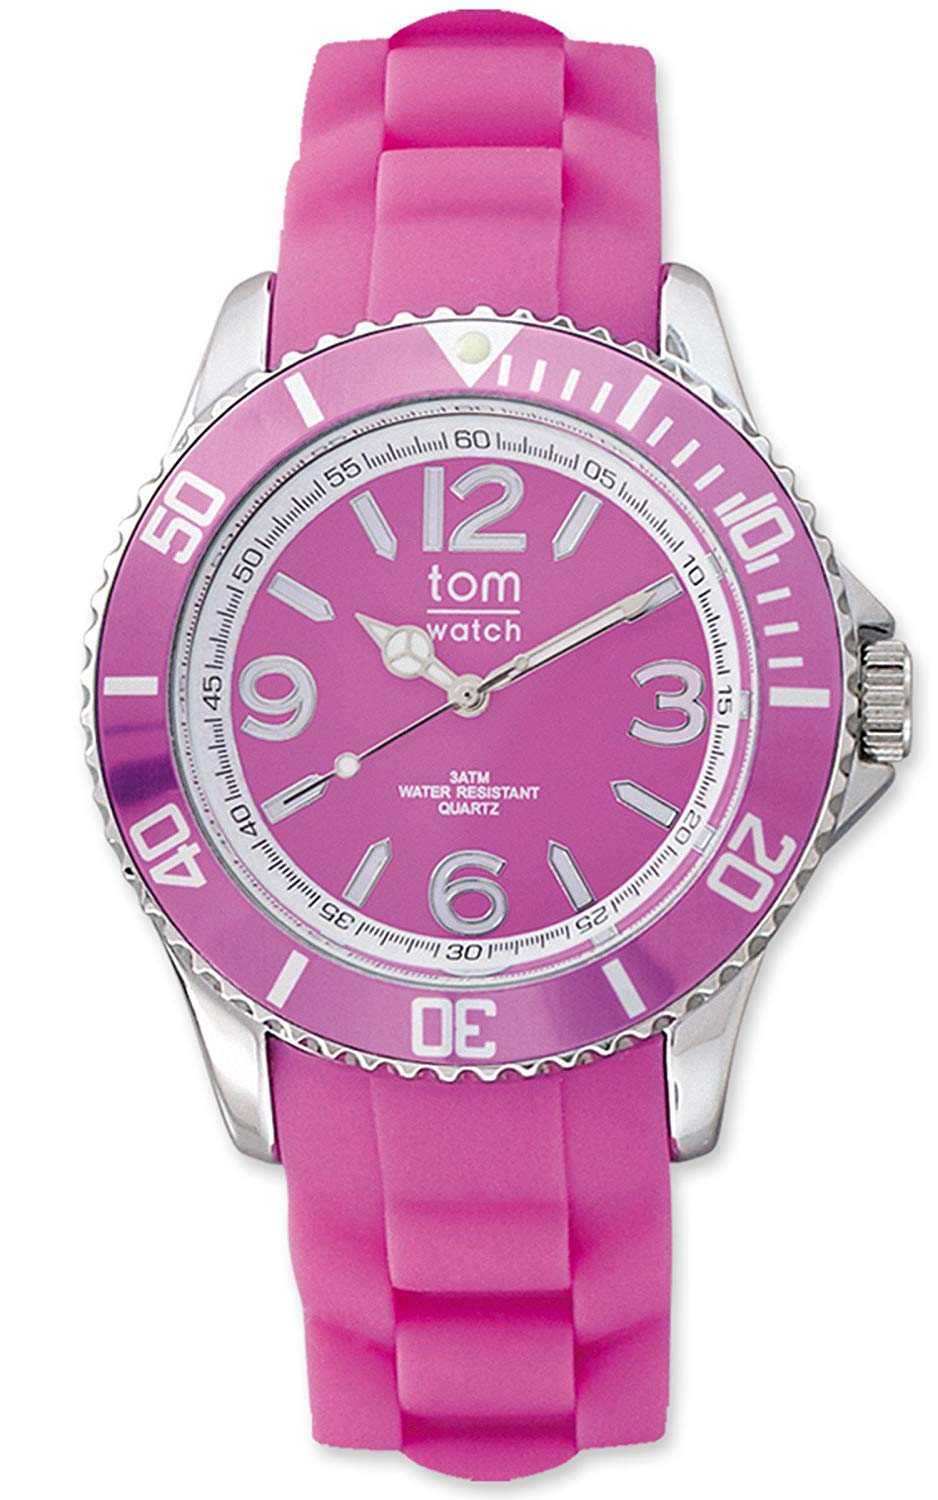 tom watch Unisex Adult Analogue Quartz Watch with Rubber Strap WA00127